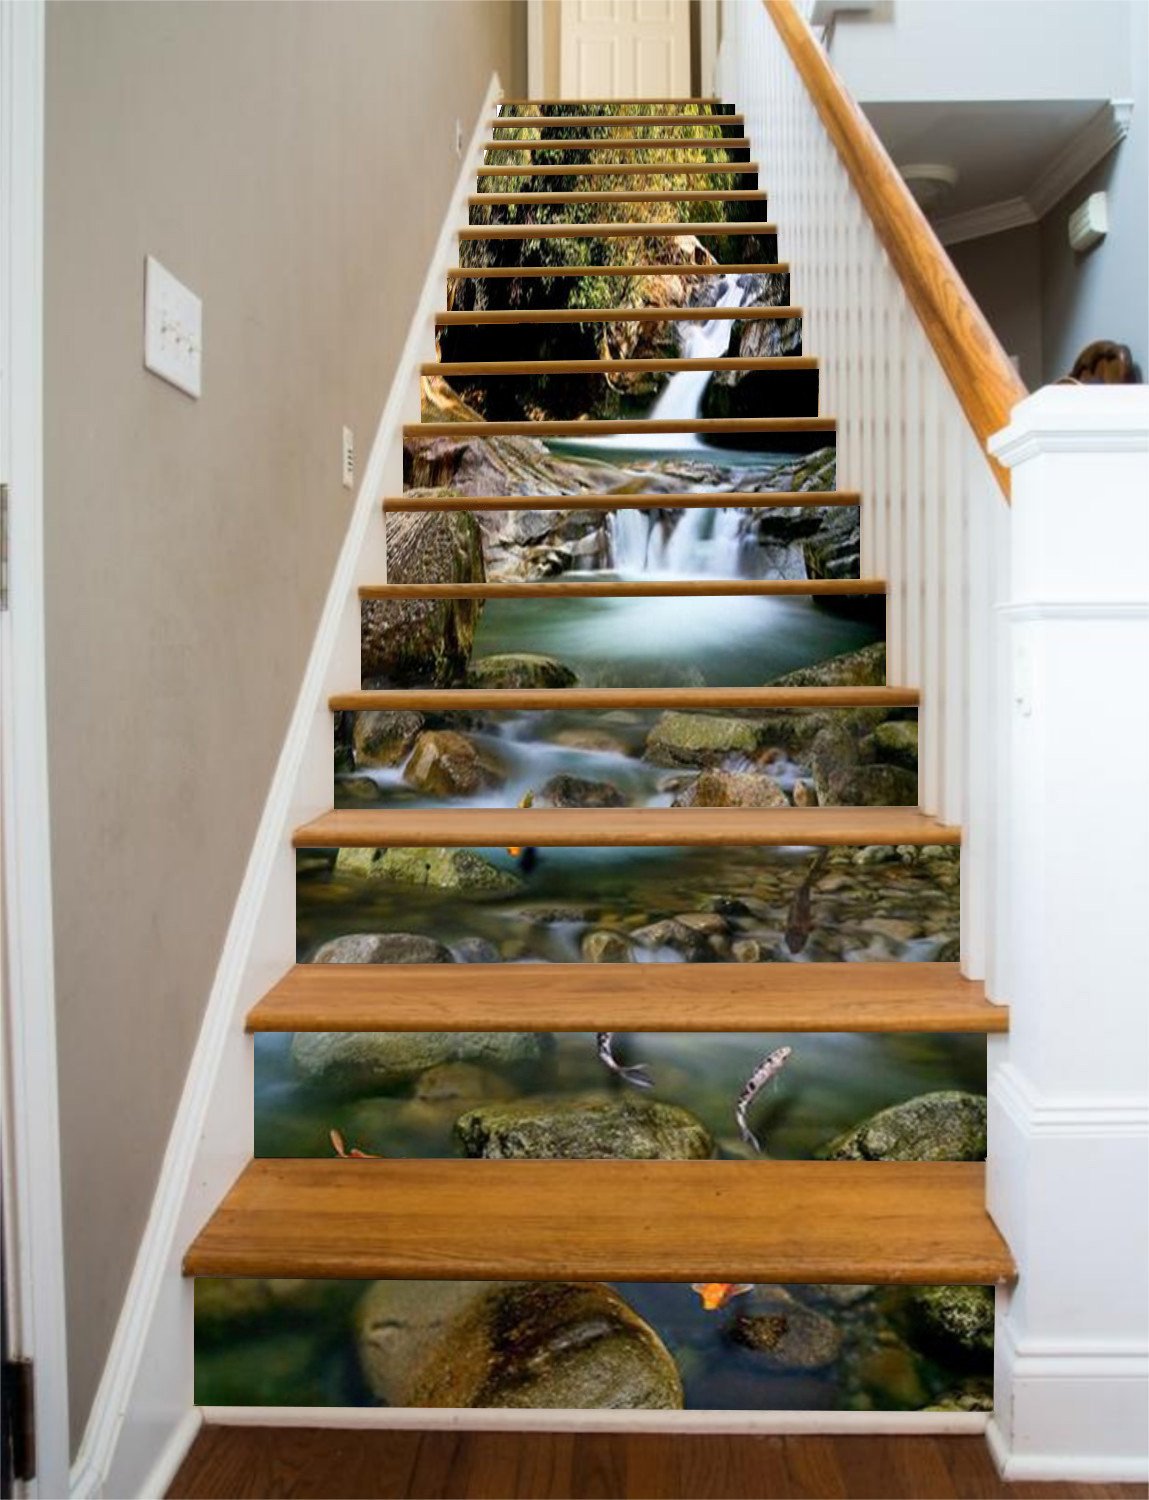 3D Stony River Fishes 401 Stair Risers Wallpaper AJ Wallpaper 